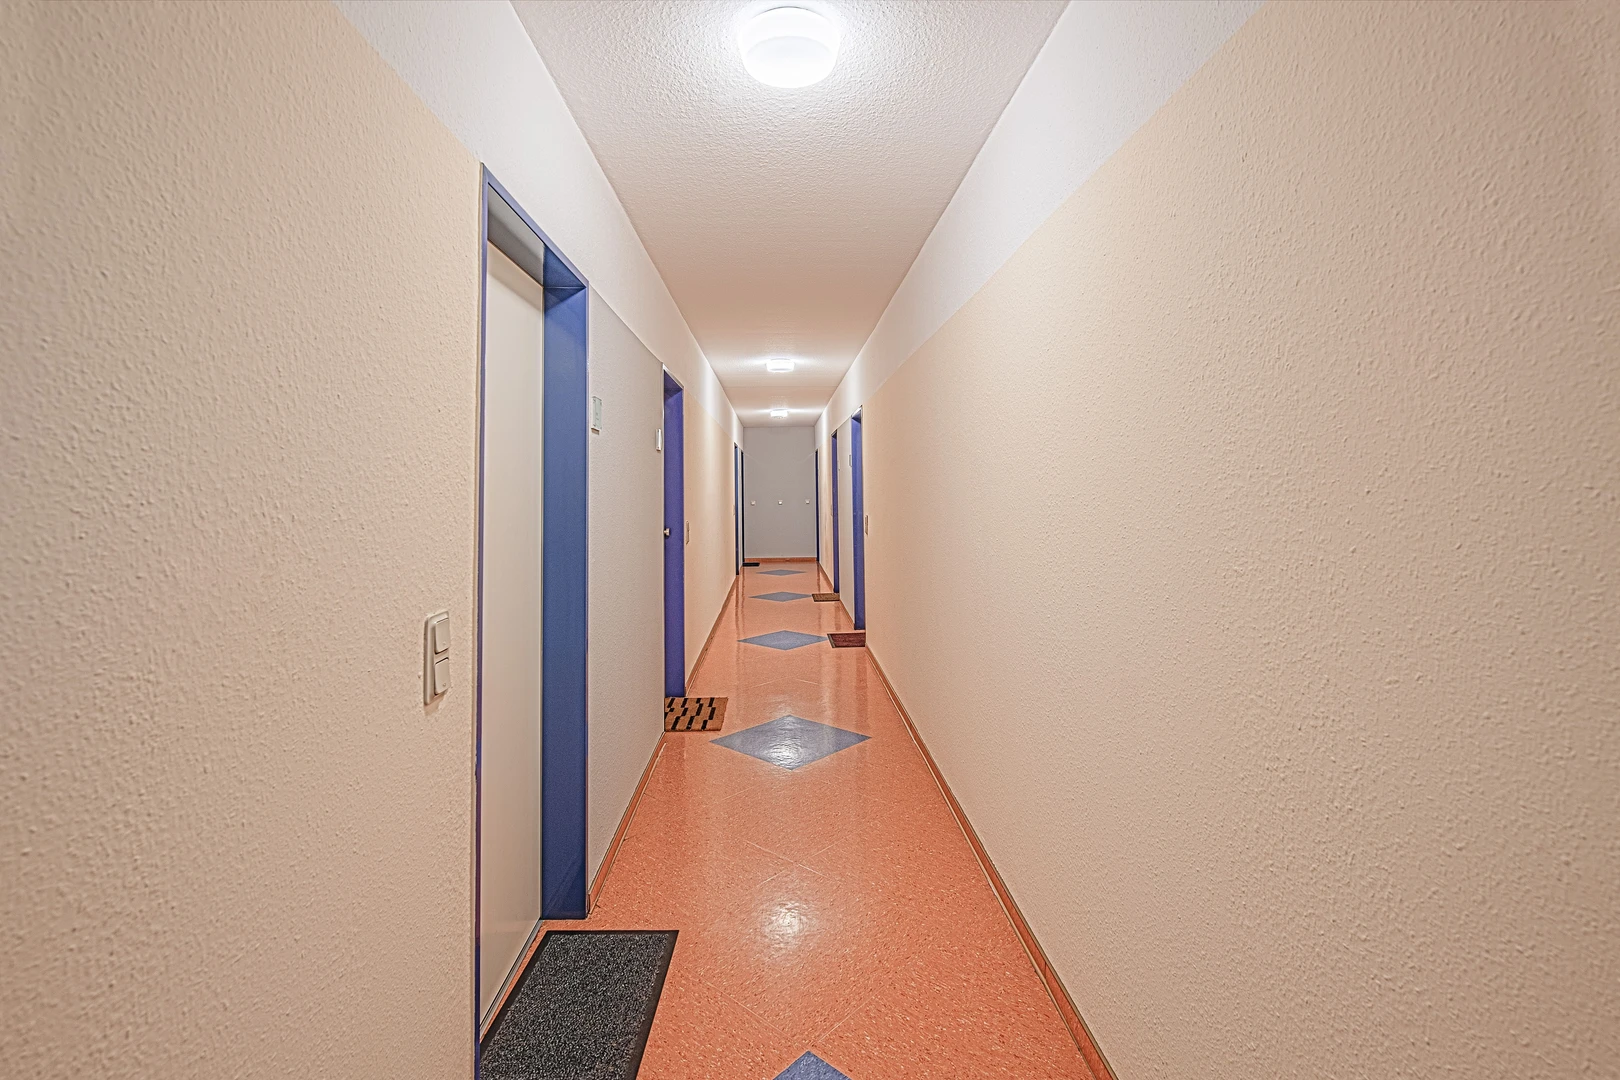 Cheap private room in Bochum